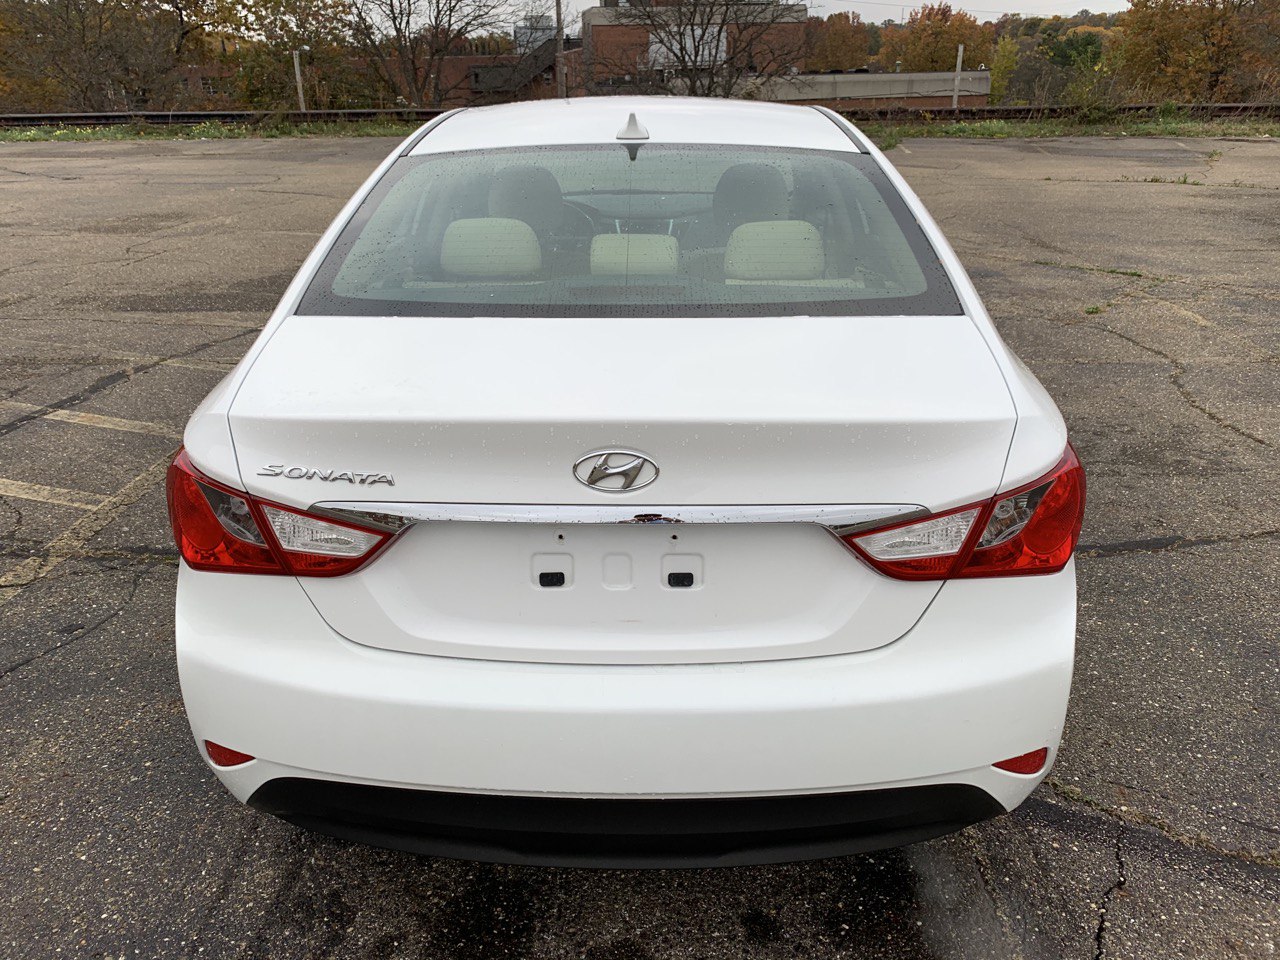 Used 2014 Hyundai Sonata GLS Sedan $9400 For sale in Akron Ohio